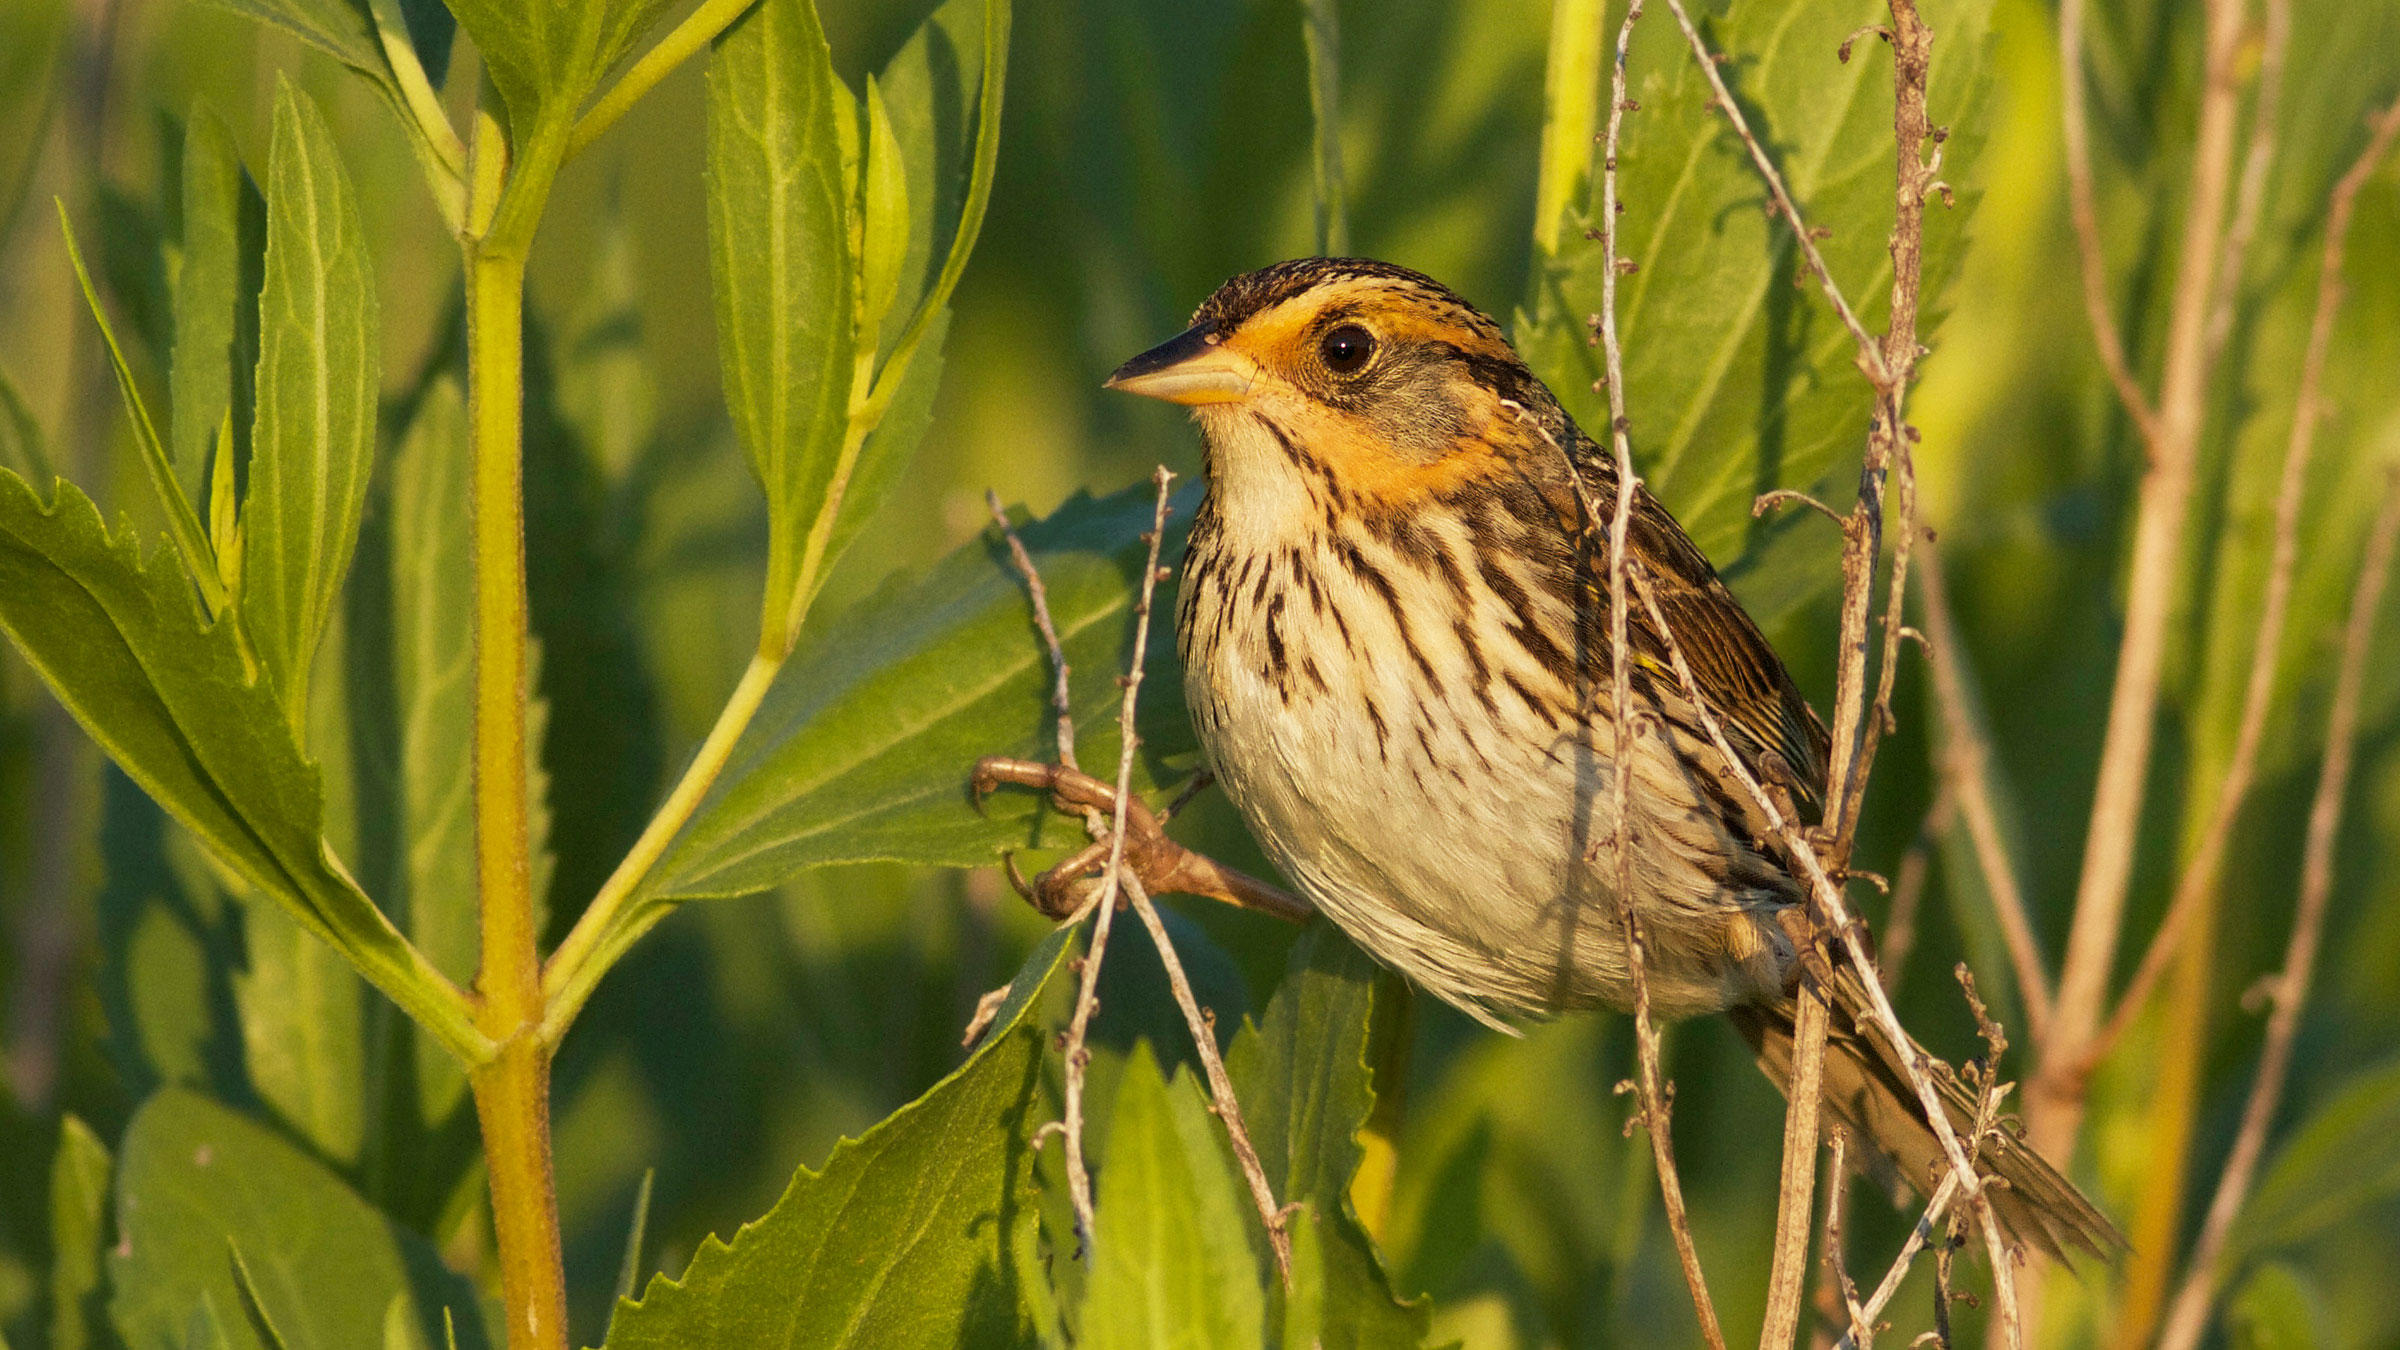 Saving the Salmarsh Sparrow from Extinction | Habitat Loss and ...